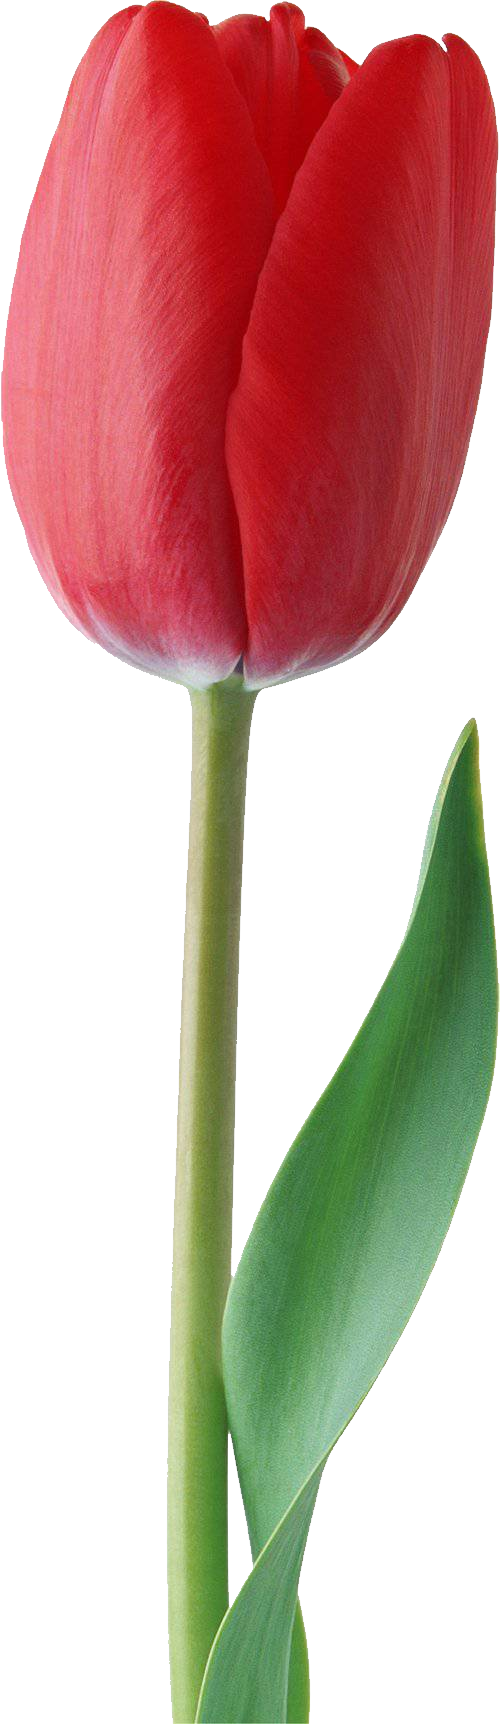 Fotos de tulipán rojo PNG